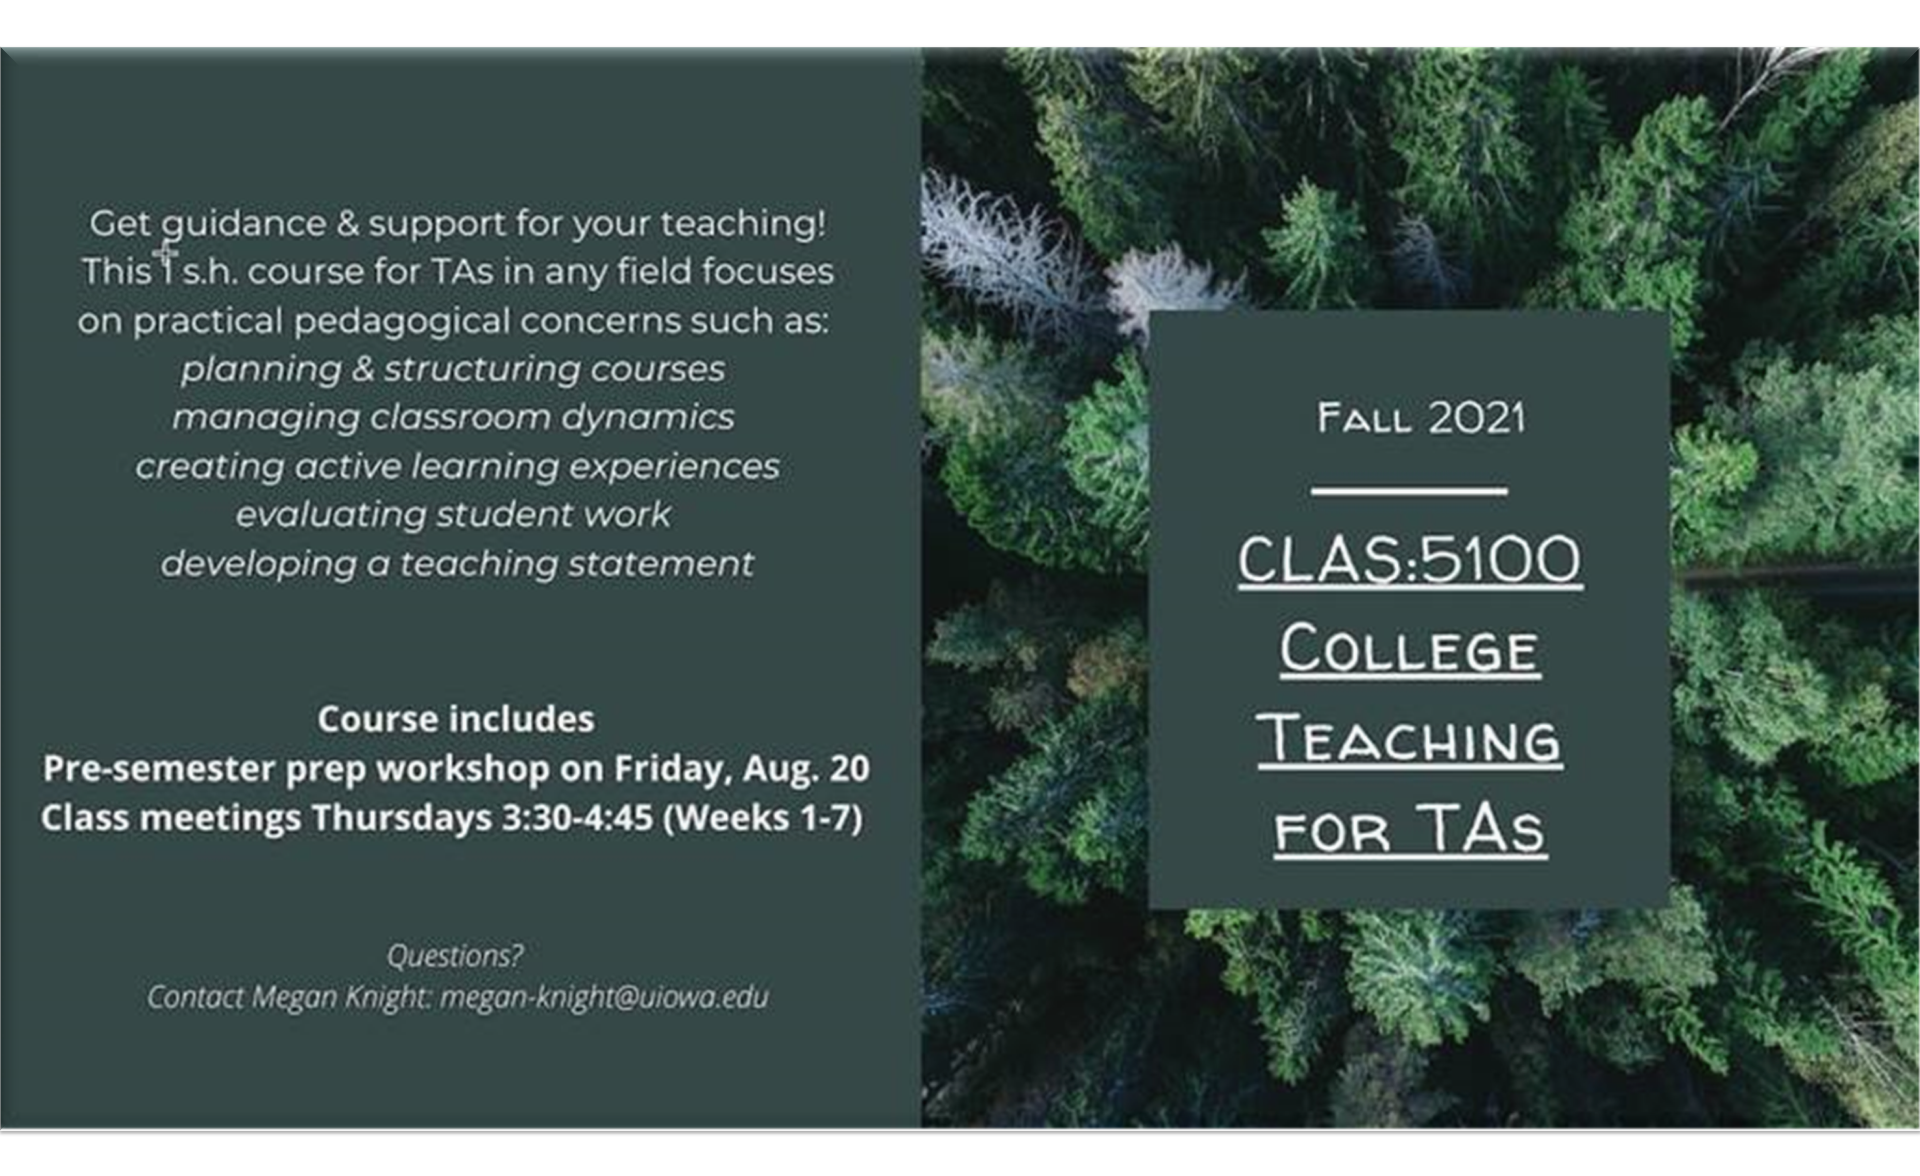 College Teaching for TAs - Fall 2021